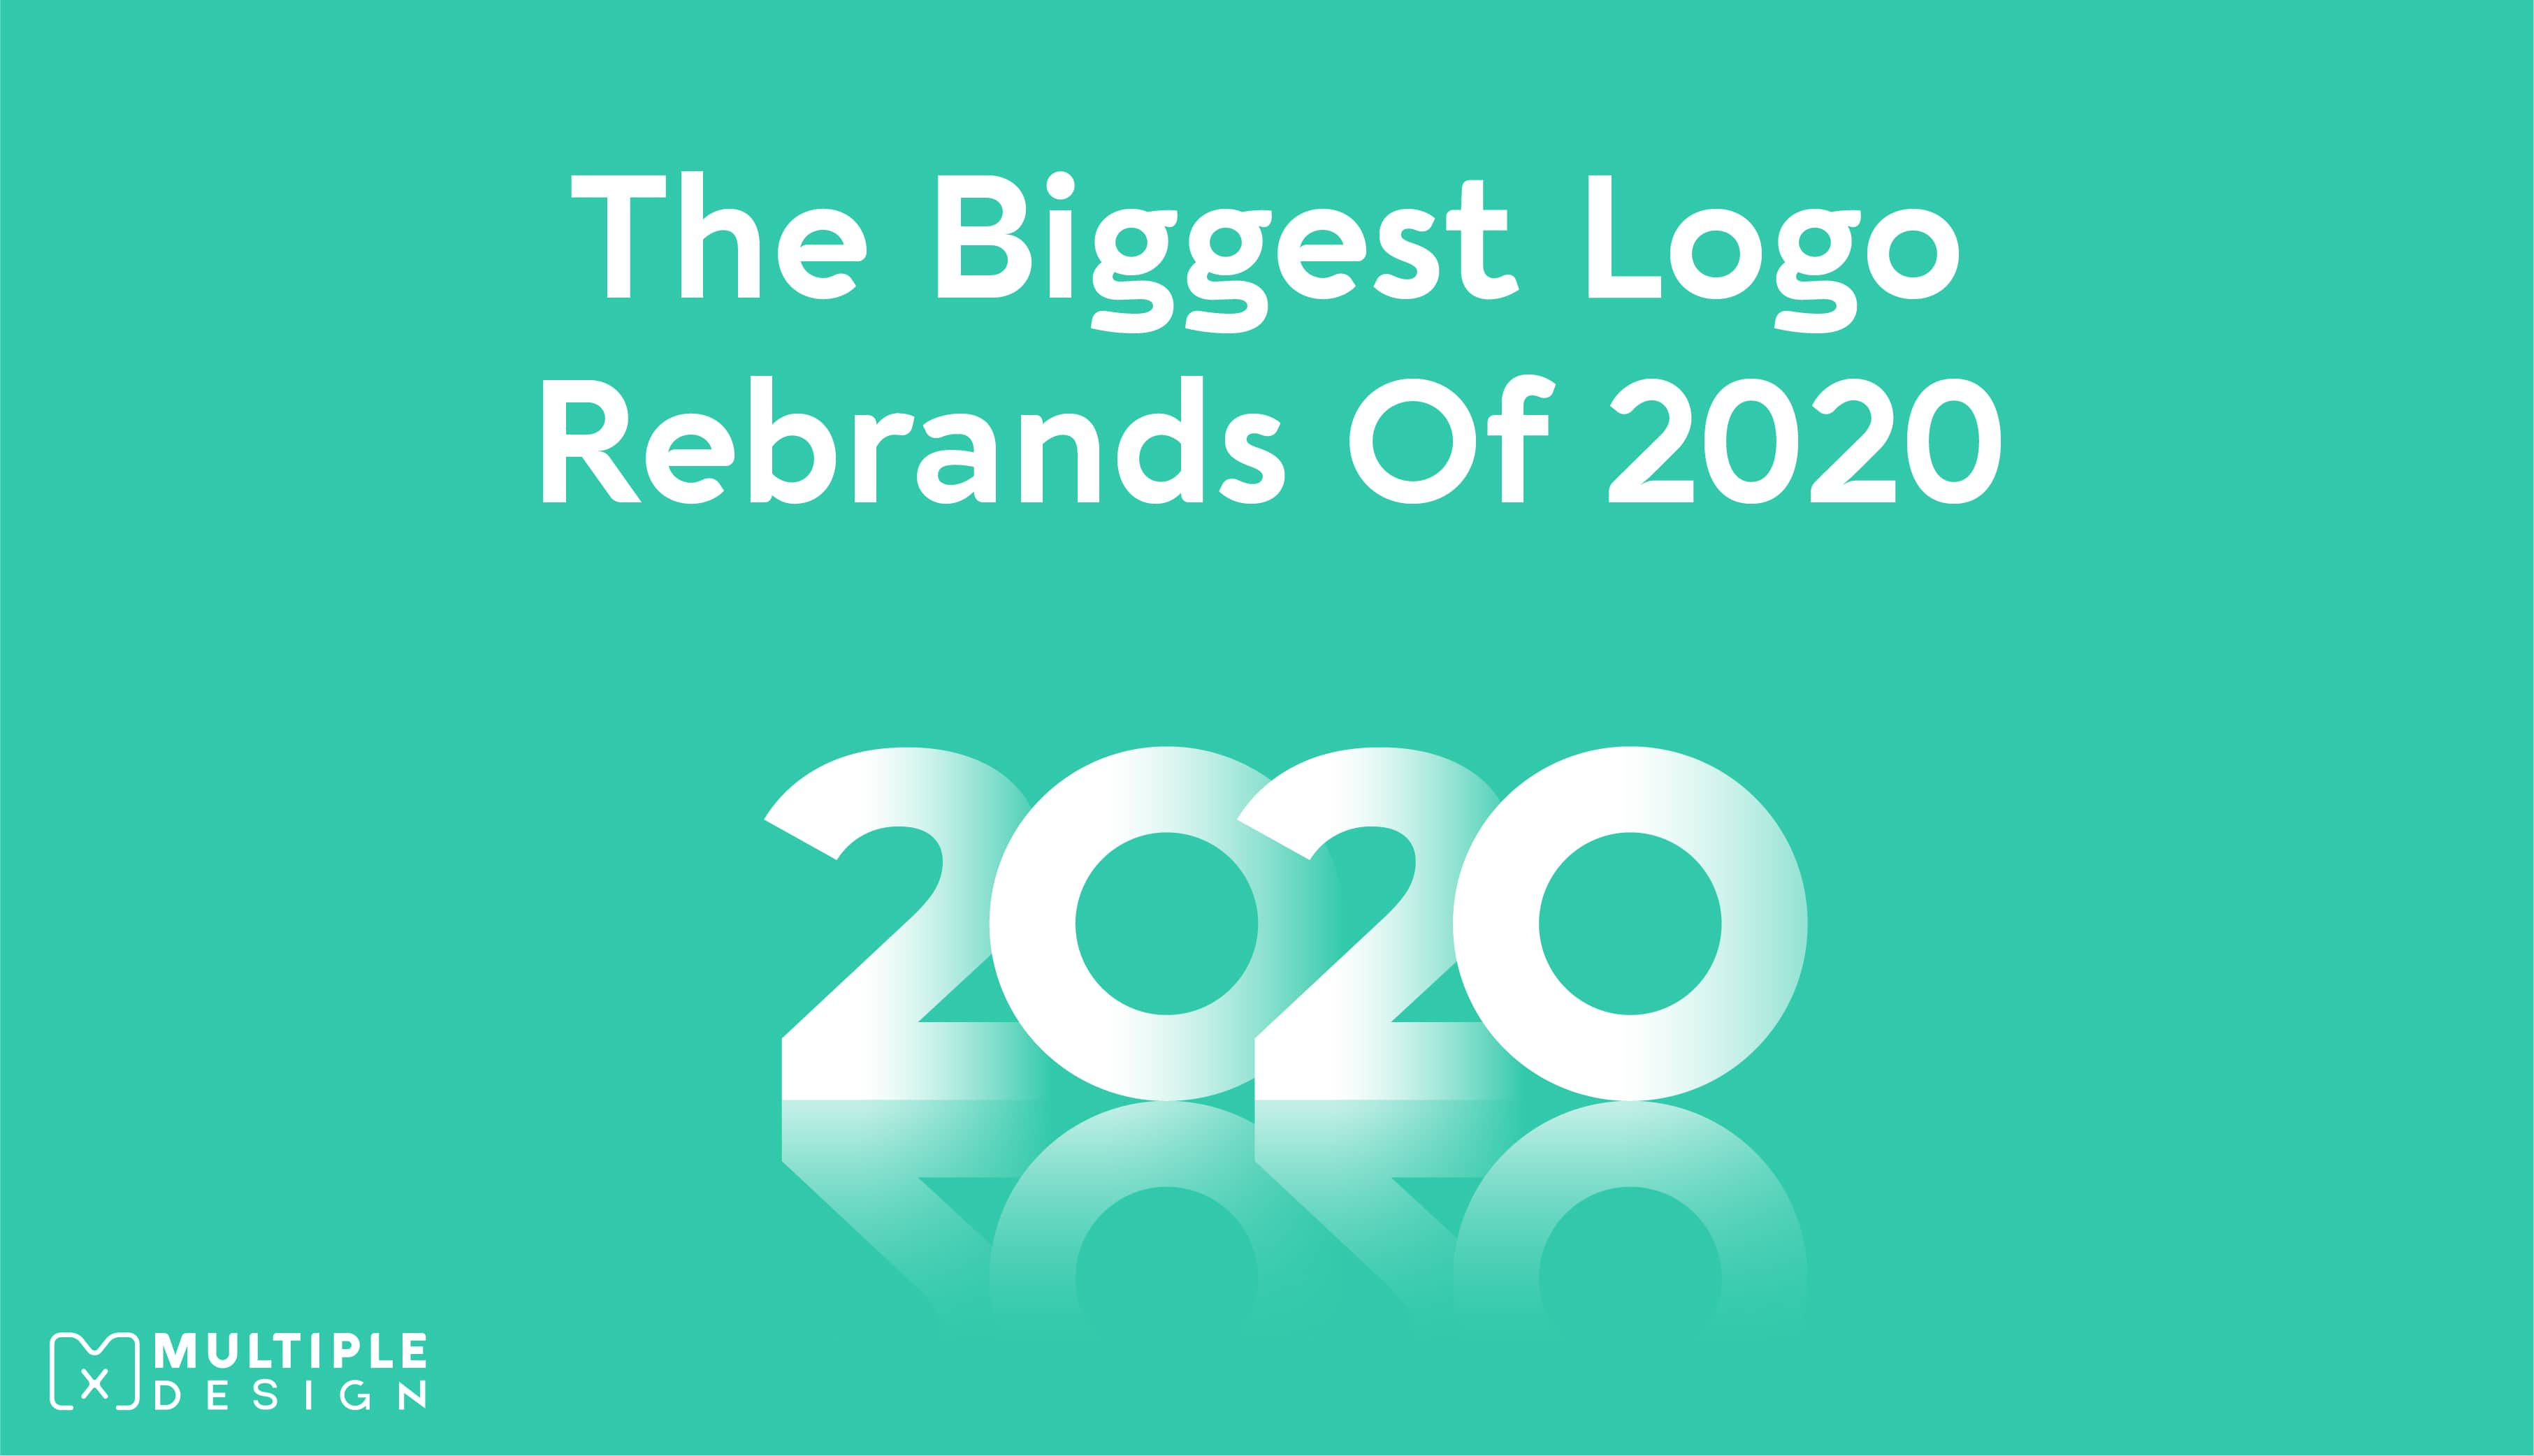 The Biggest Logo Rebrands Of 2020